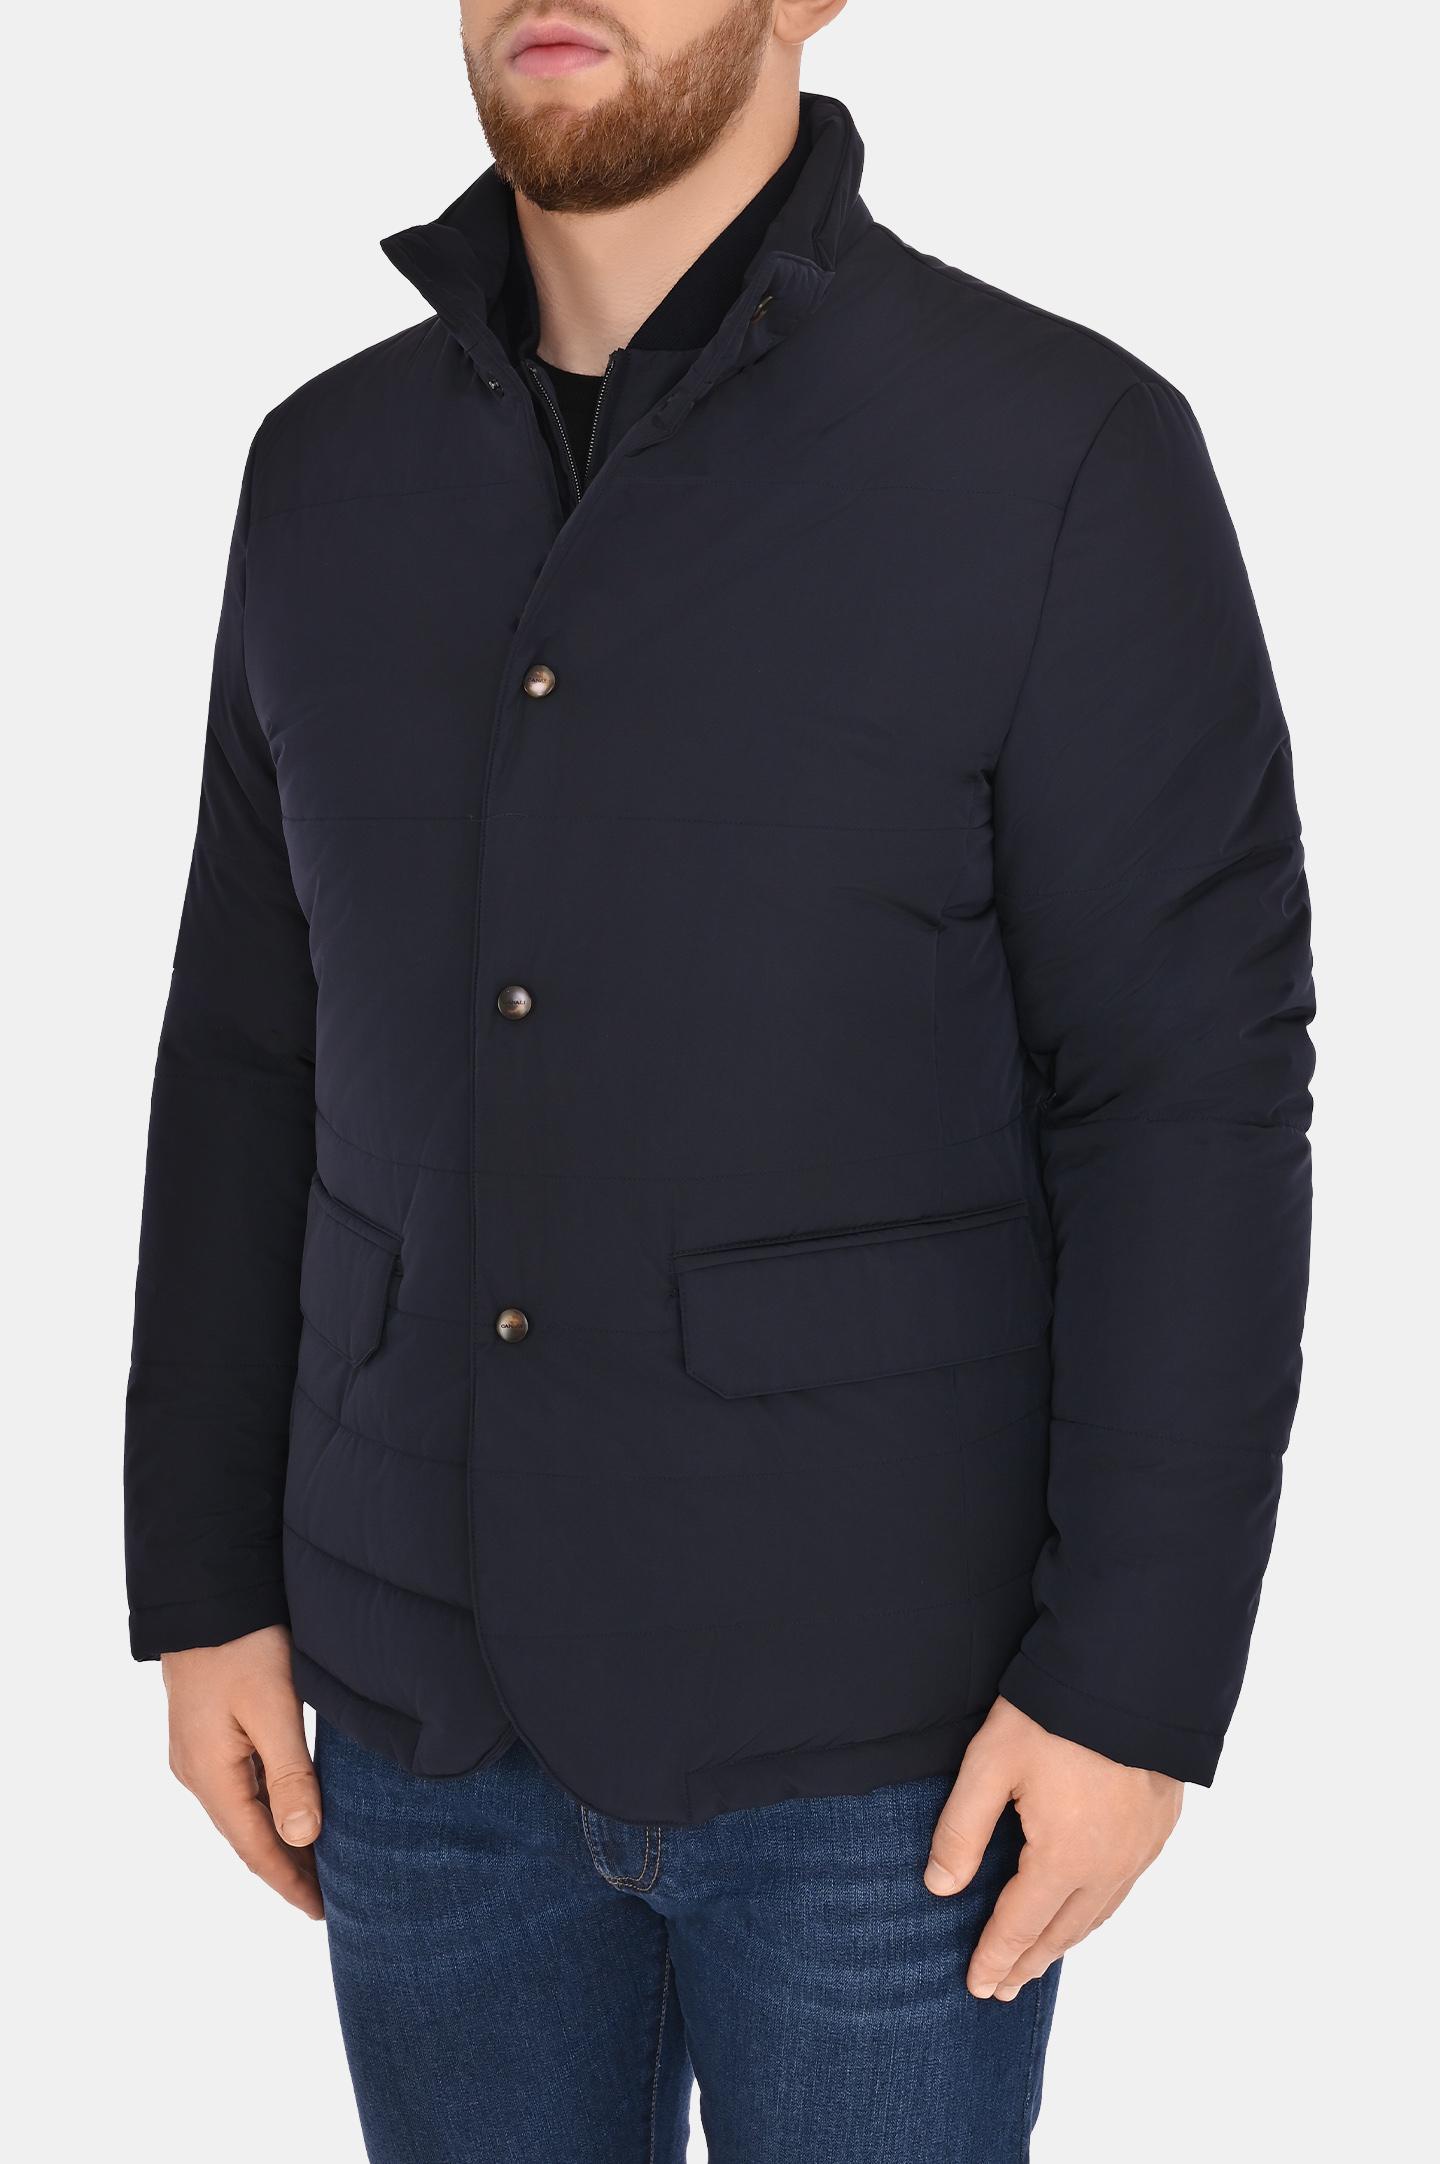 Куртка CANALI SG02321 O30443, цвет: Темно-синий, Мужской